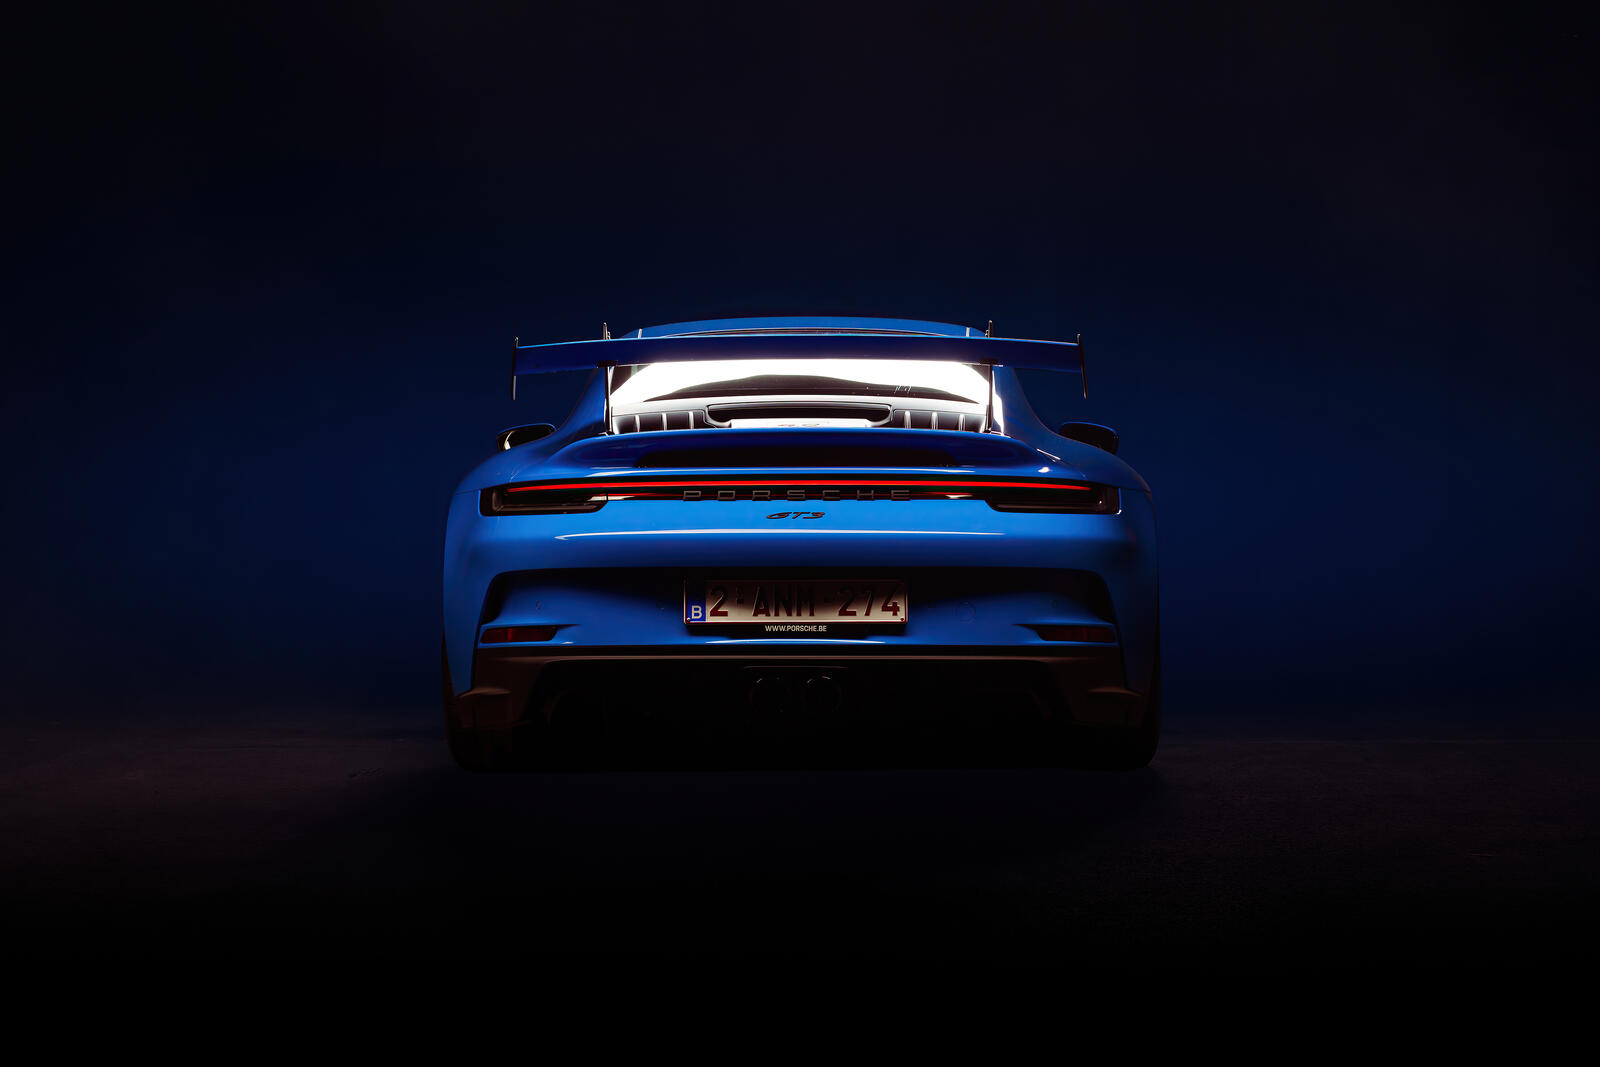 Wallpapers Porsche 911 cars 2021 cars on the desktop